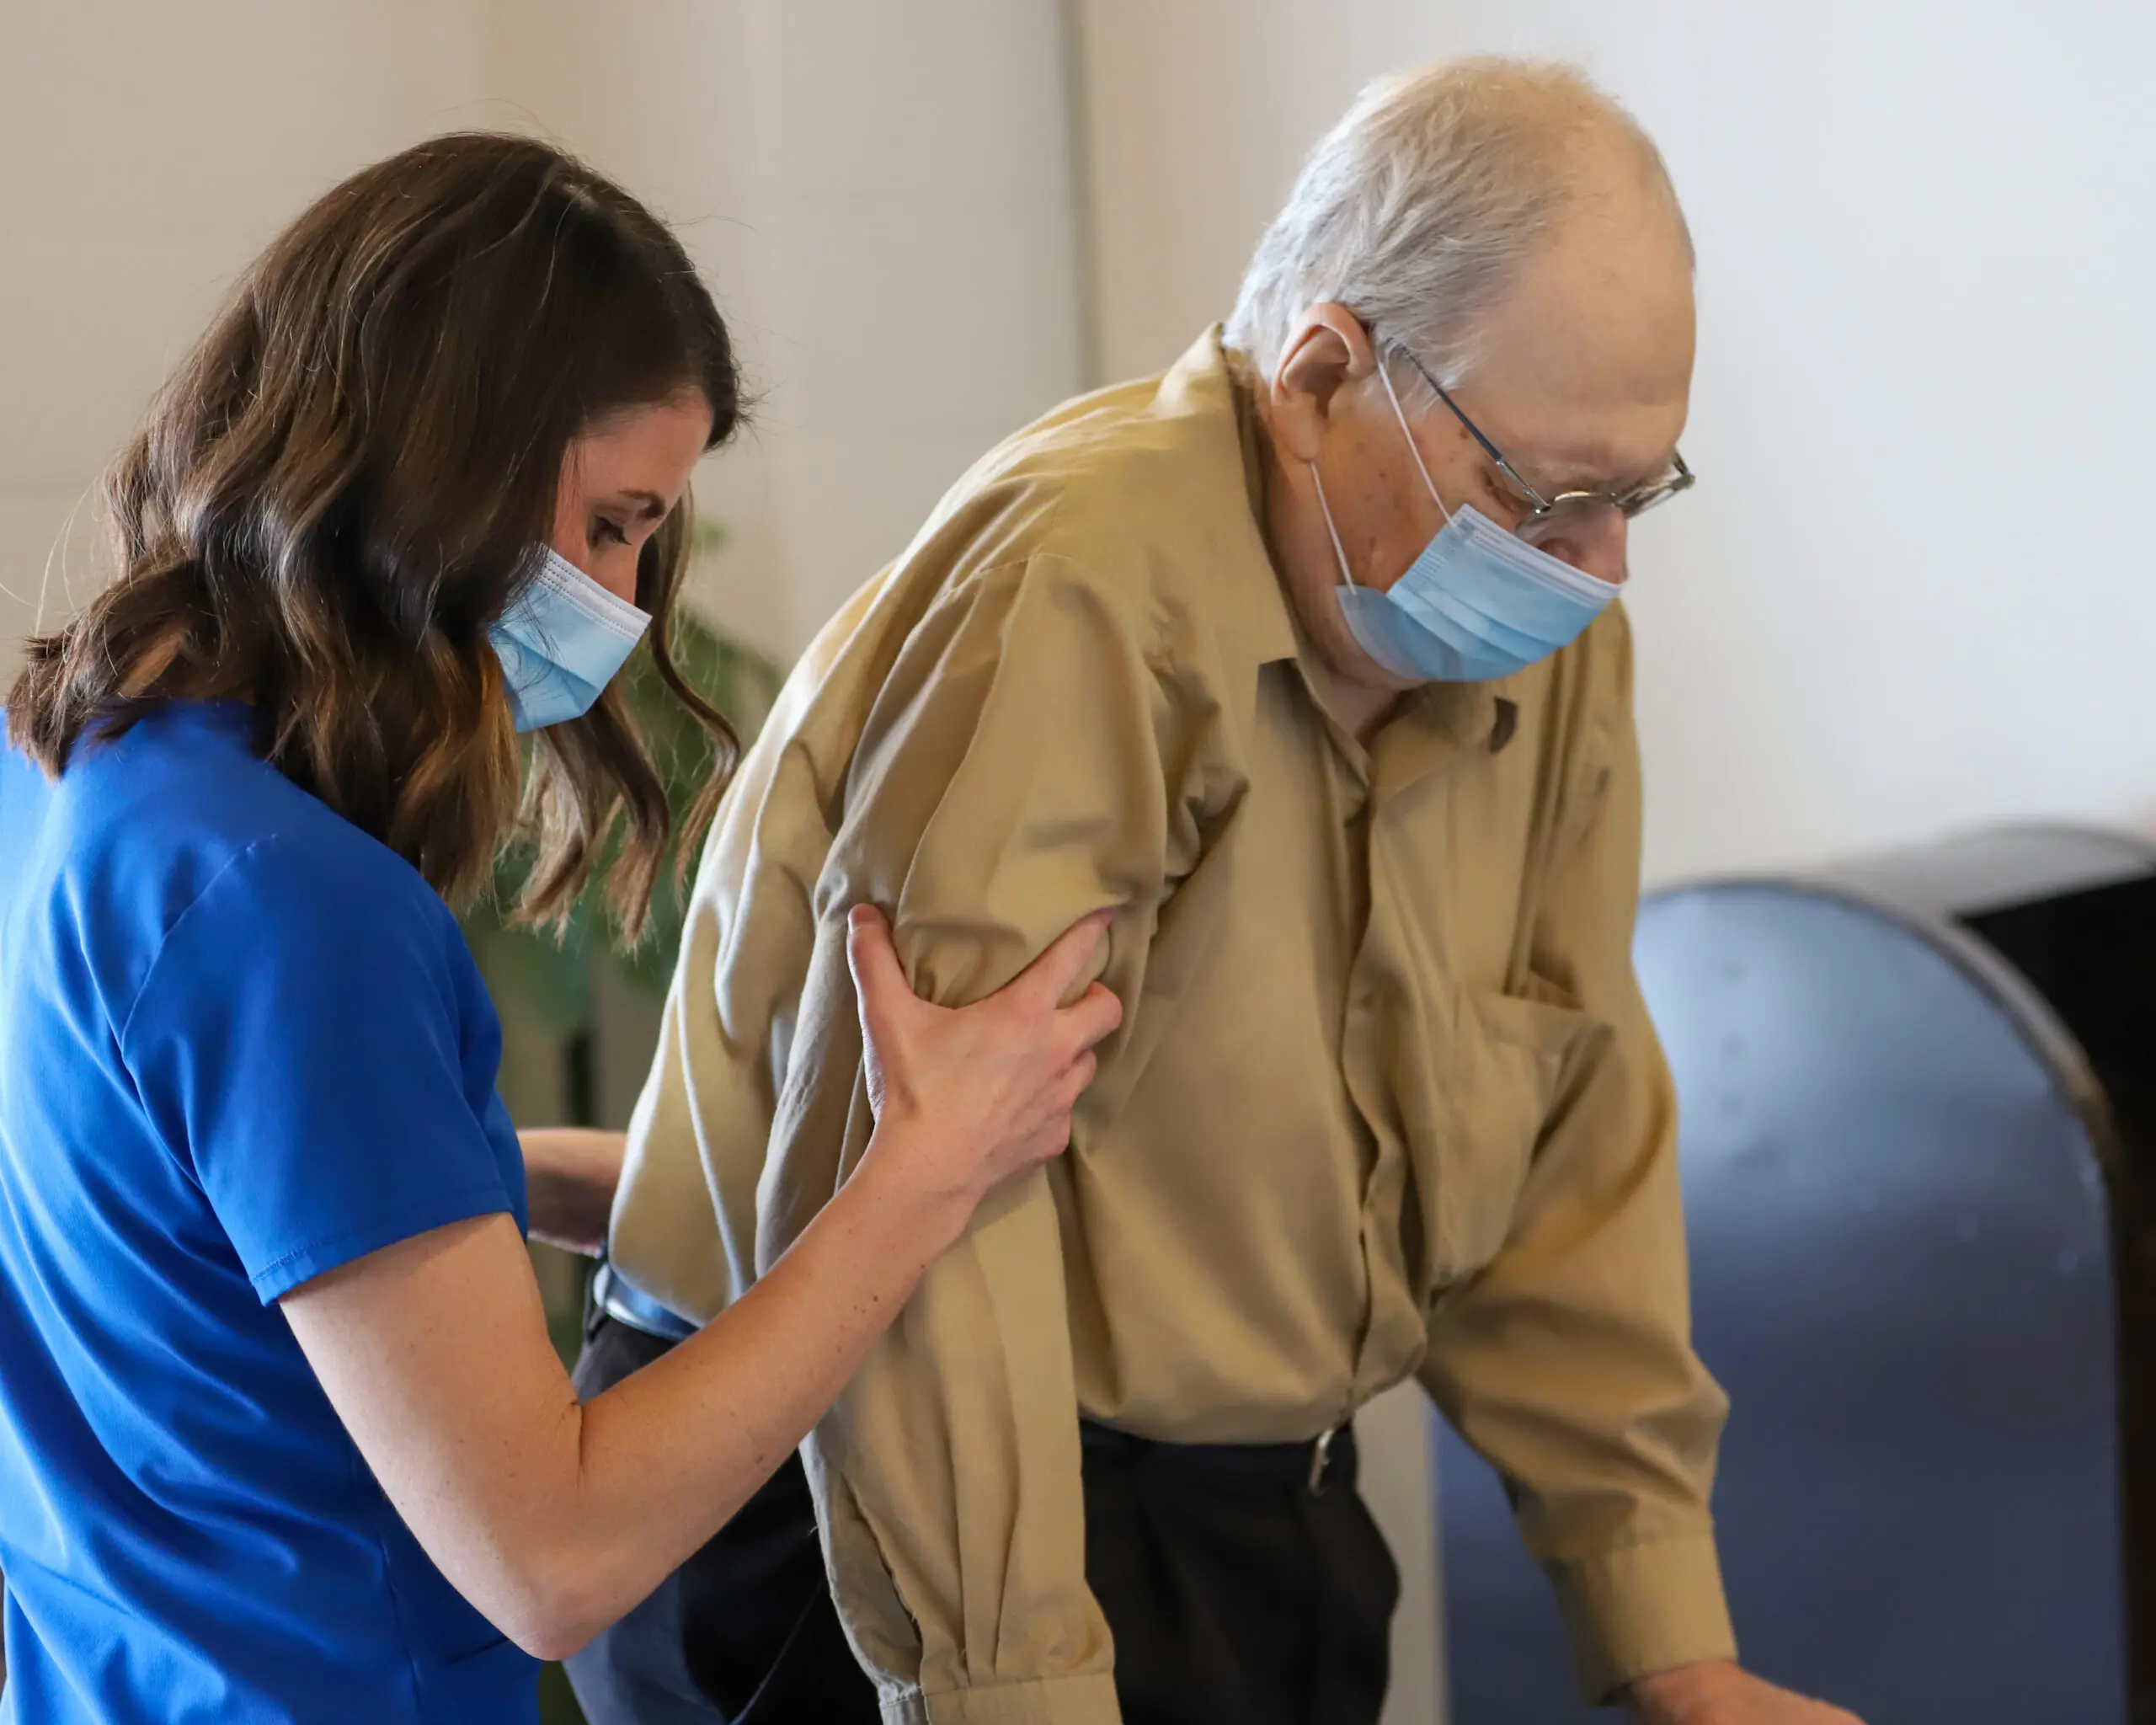 Health care professional helping an elderly man walk.